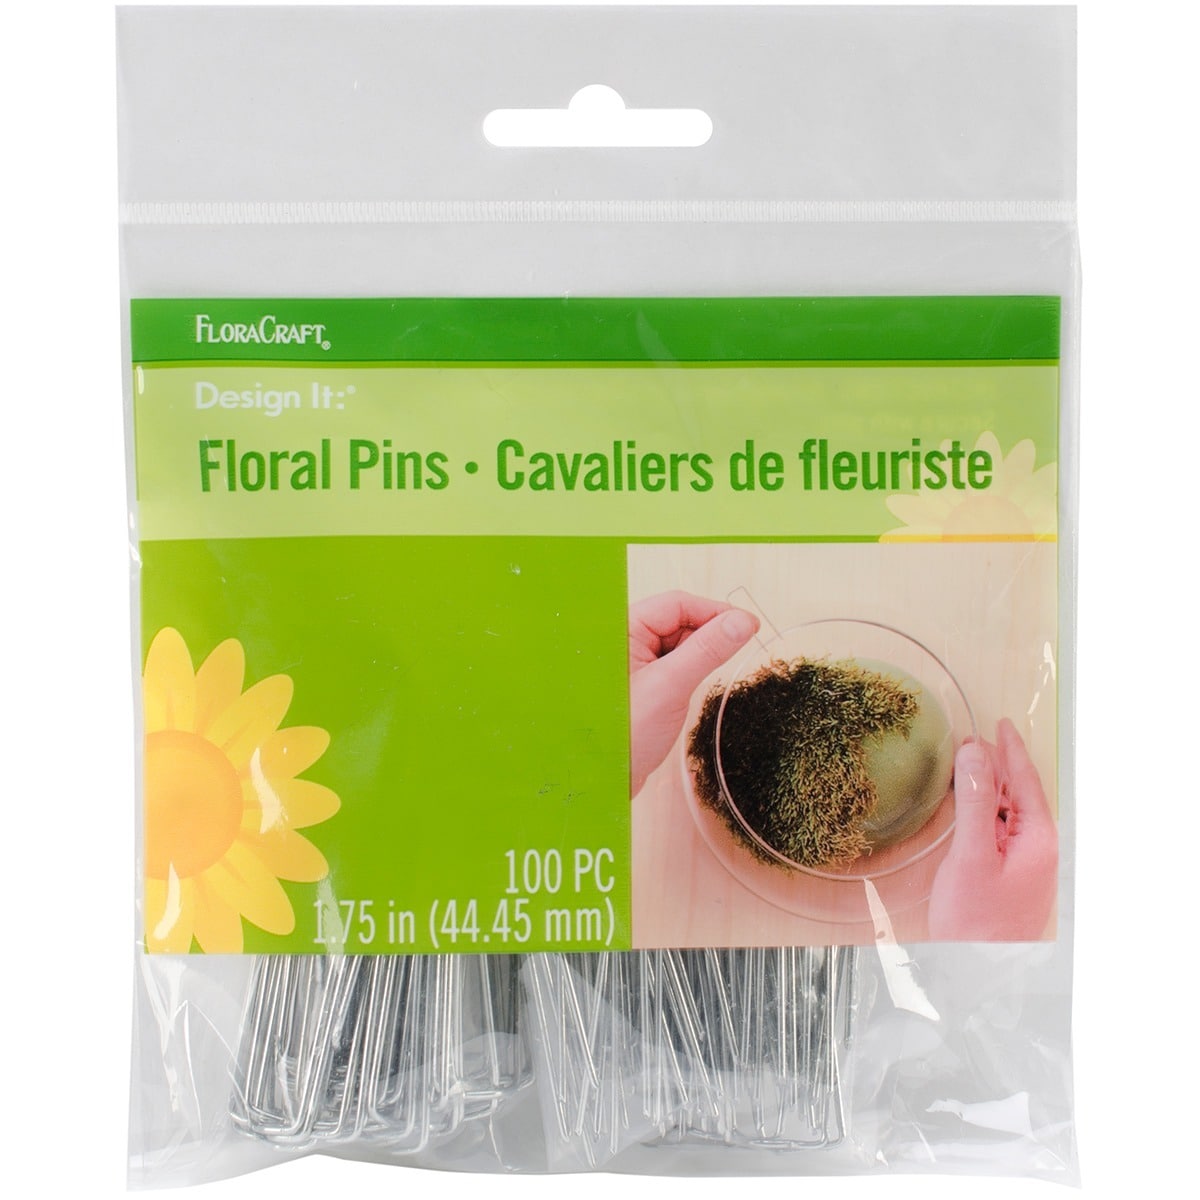 FloraCraft 1.75" Floral Pins, 100 Piece - image 2 of 2